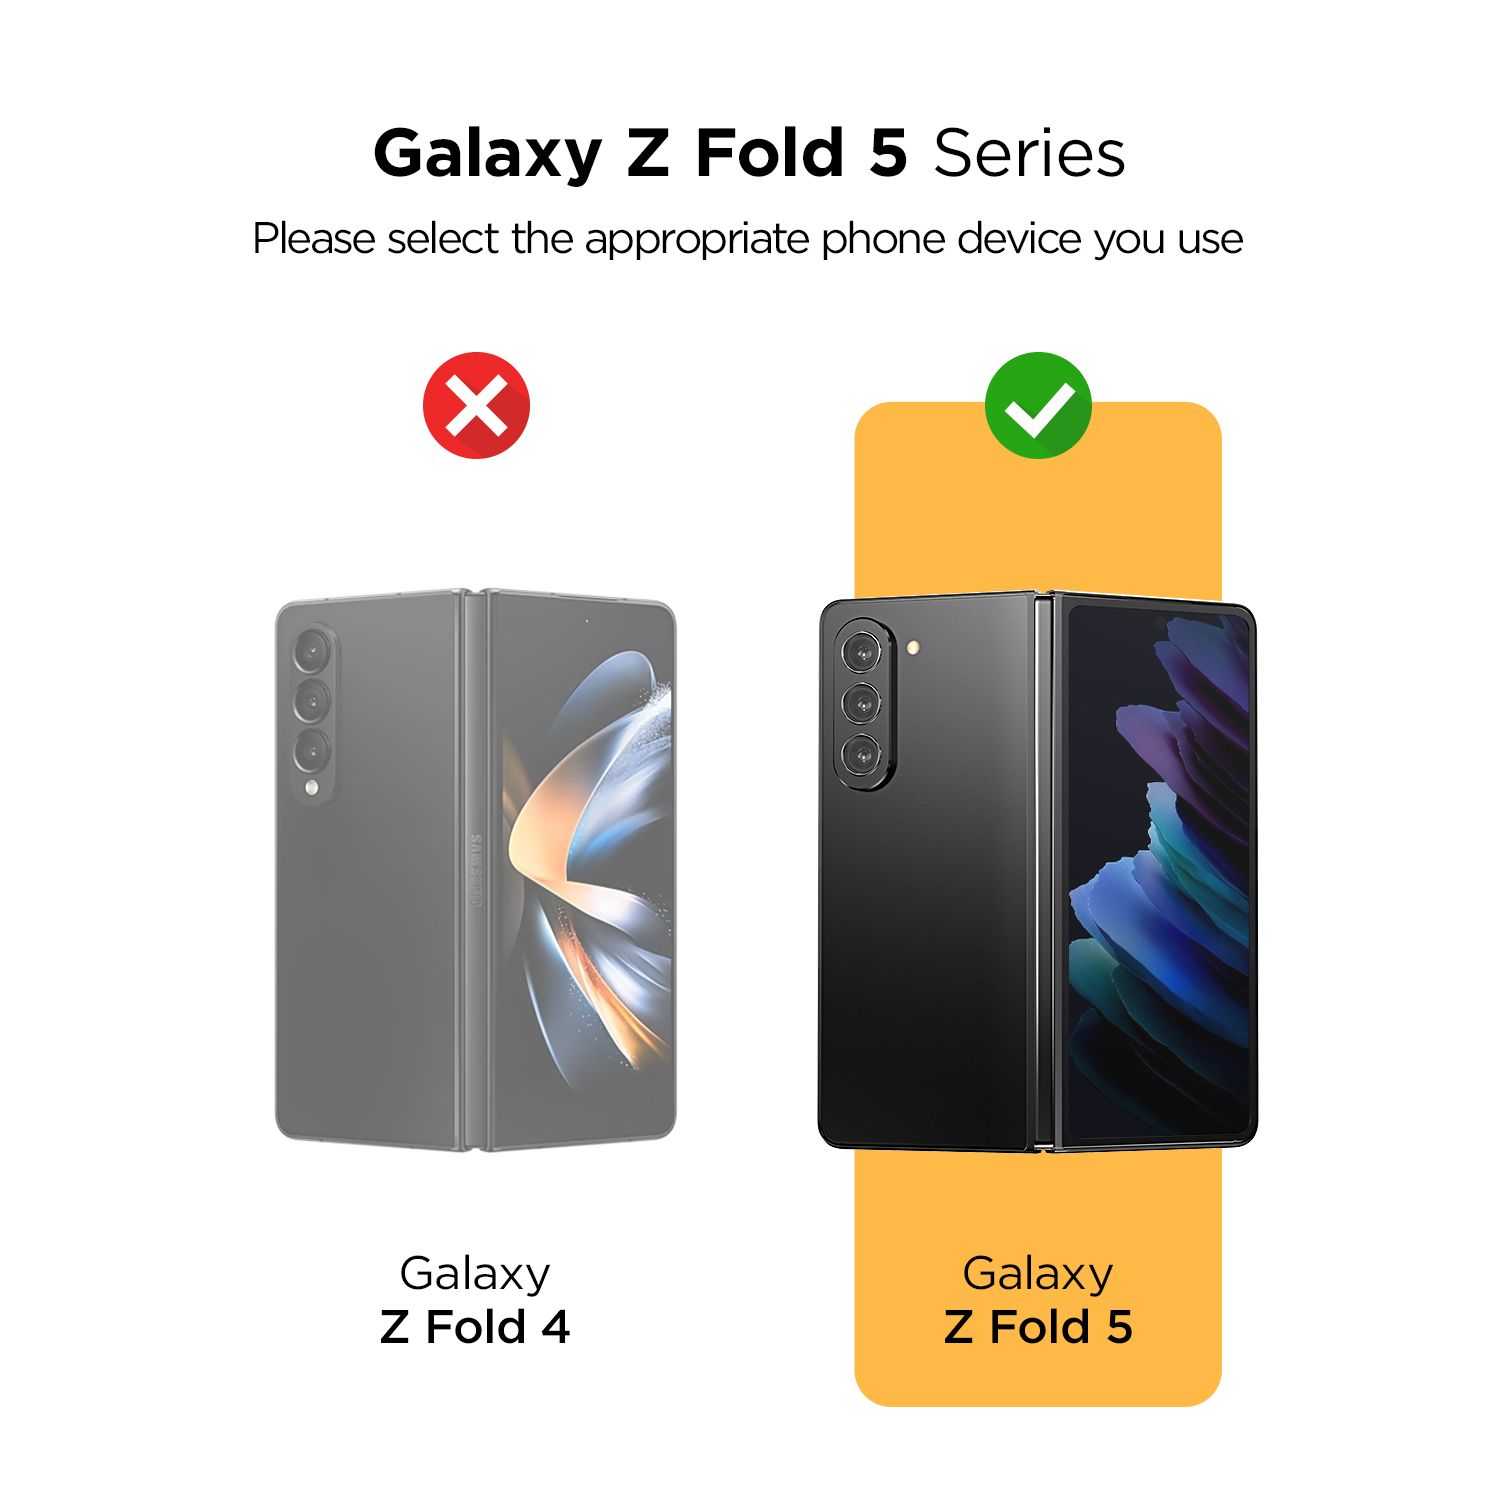 VRS รุ่น Simpli Fit - เคส Galaxy Z Fold 5 - สี Clear (แถมฟิล์มหน้าจอ)